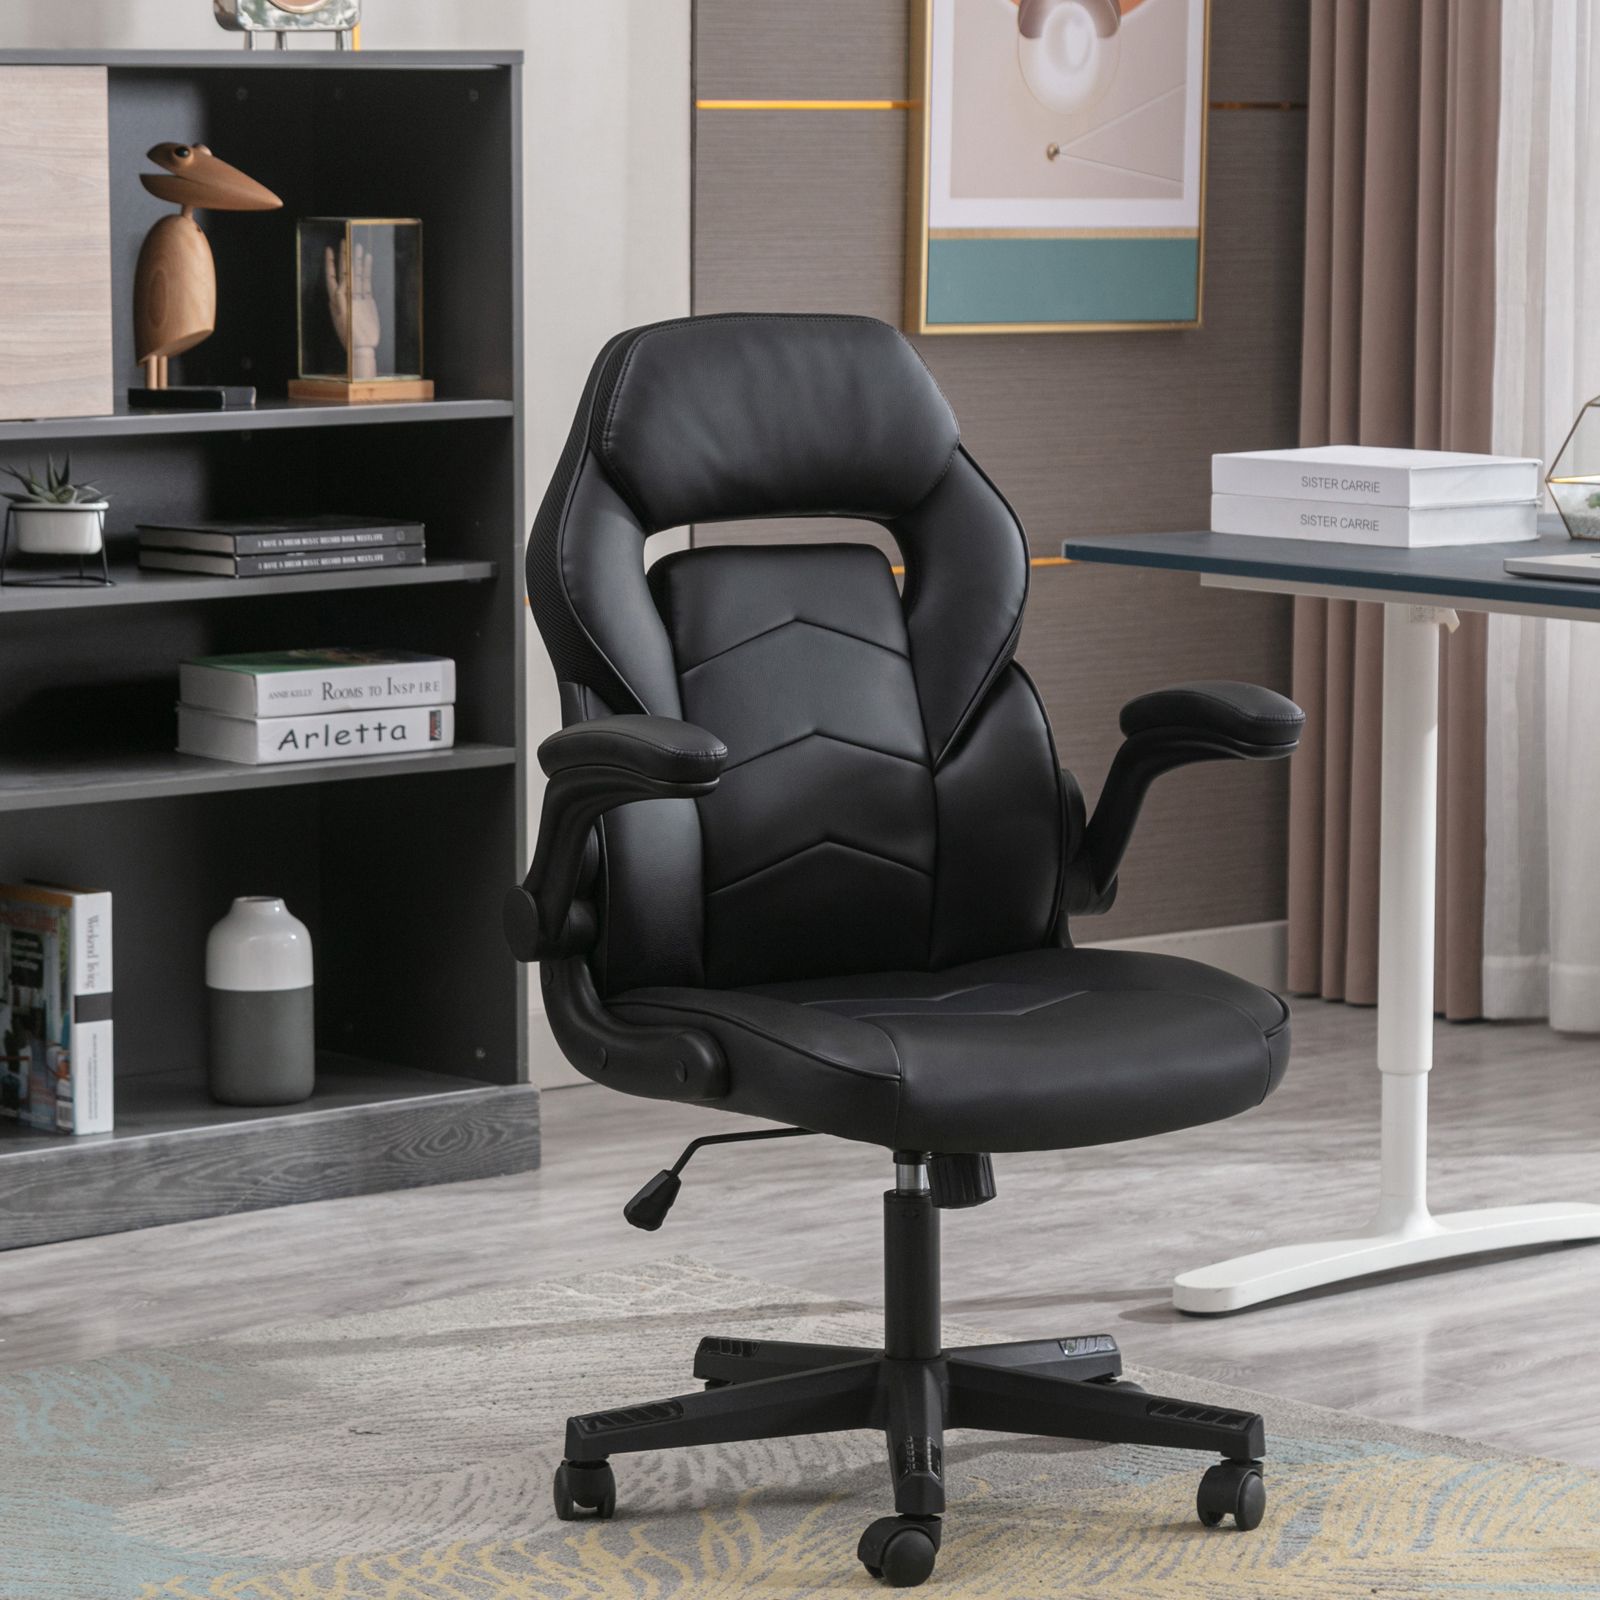 Lifesmart Ergonomic Office and Gaming Chair, Black